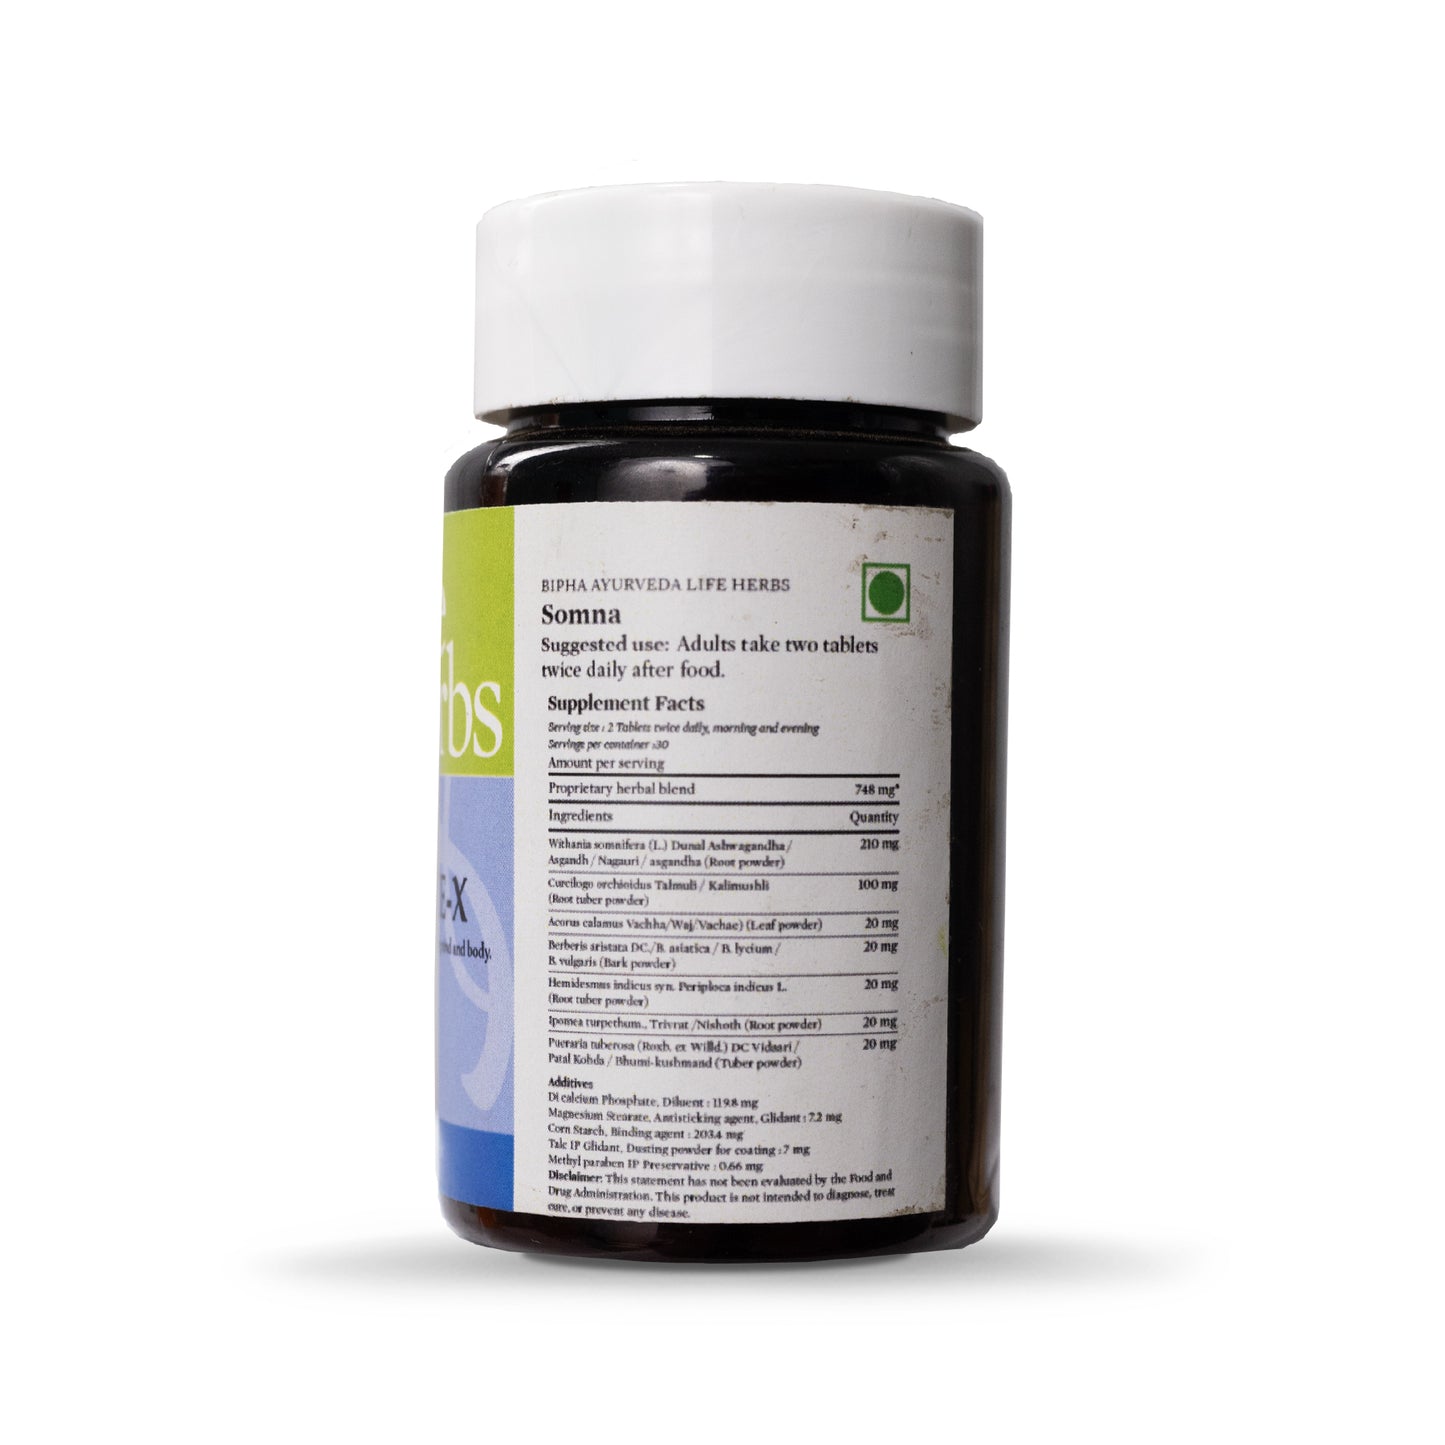 Bipha Ayurveda Snooze-X Veg Capsule Herbal Supplement for Good Sleep, 60 Tablets